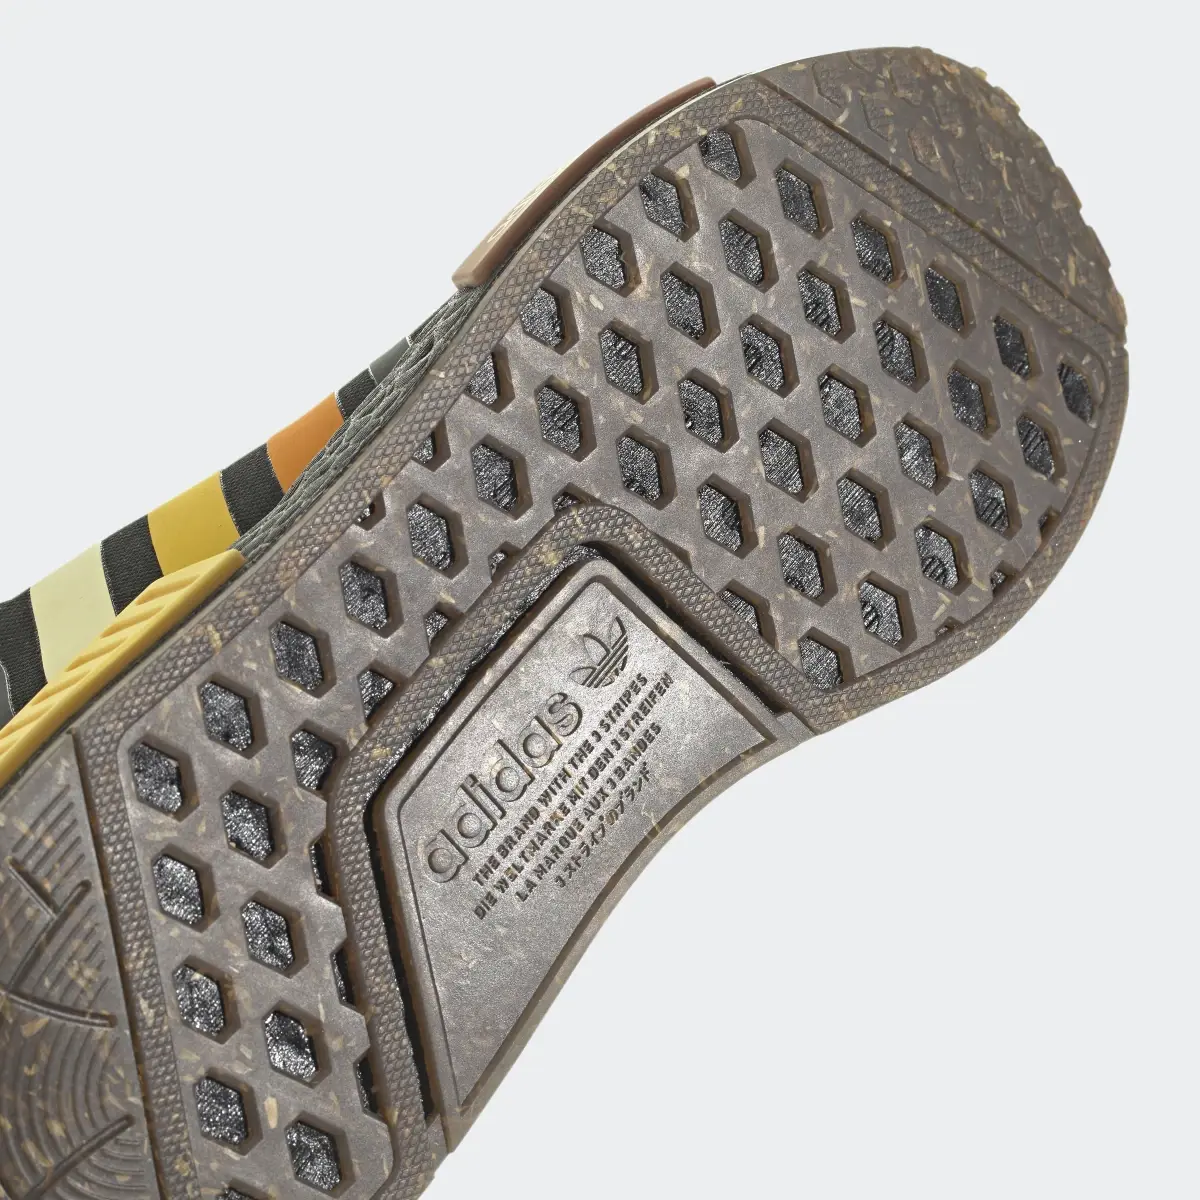 Adidas NMD_R1 Ayakkabı. 3